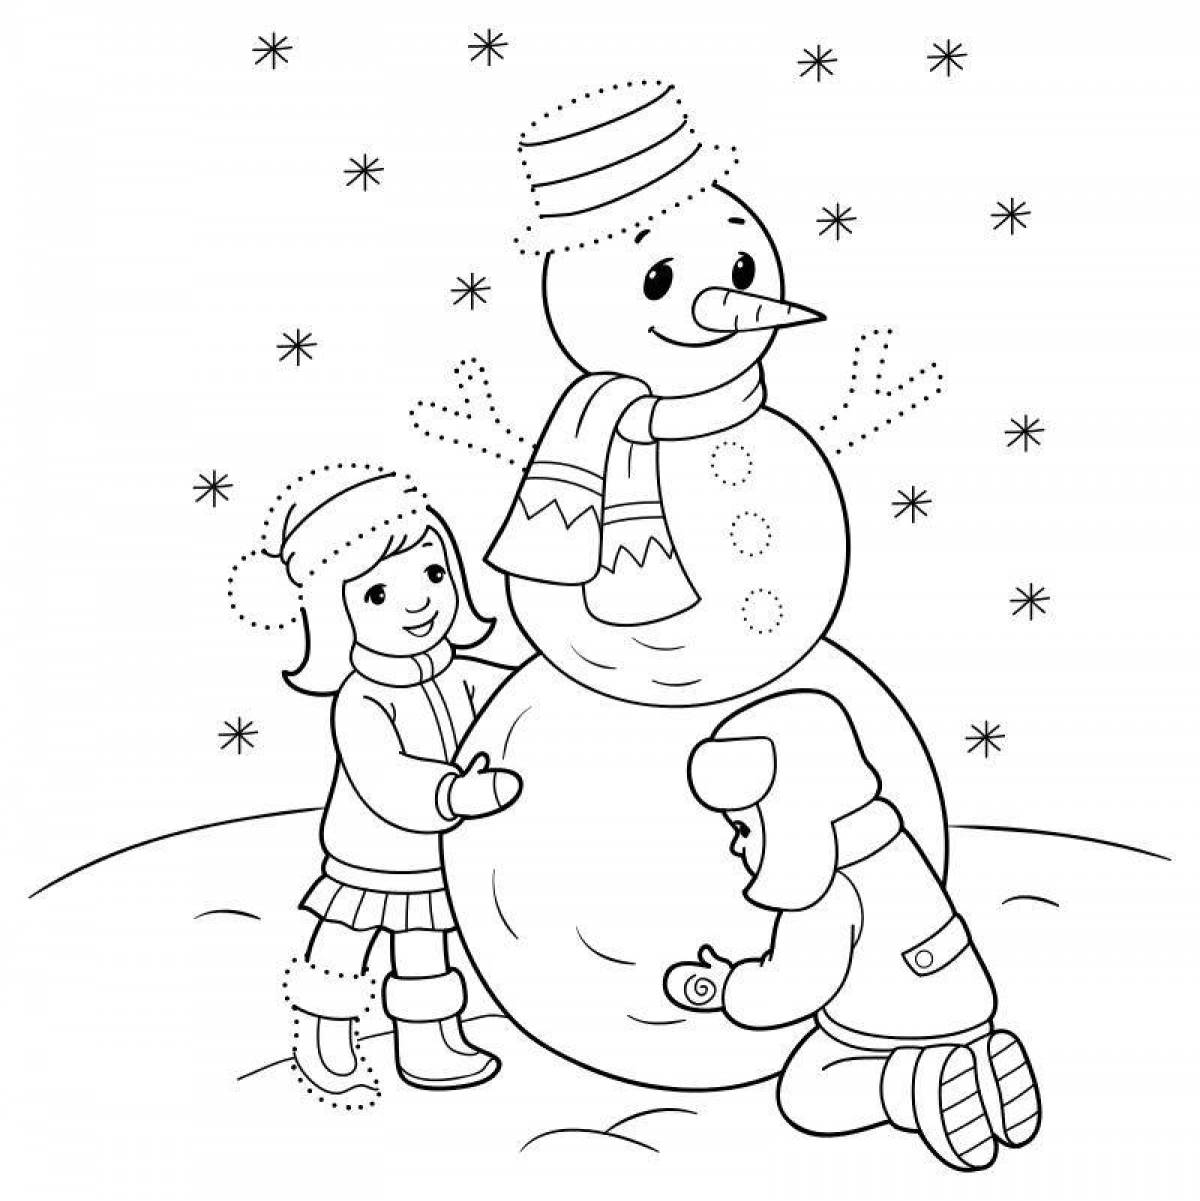 Bright coloring children make a snowman